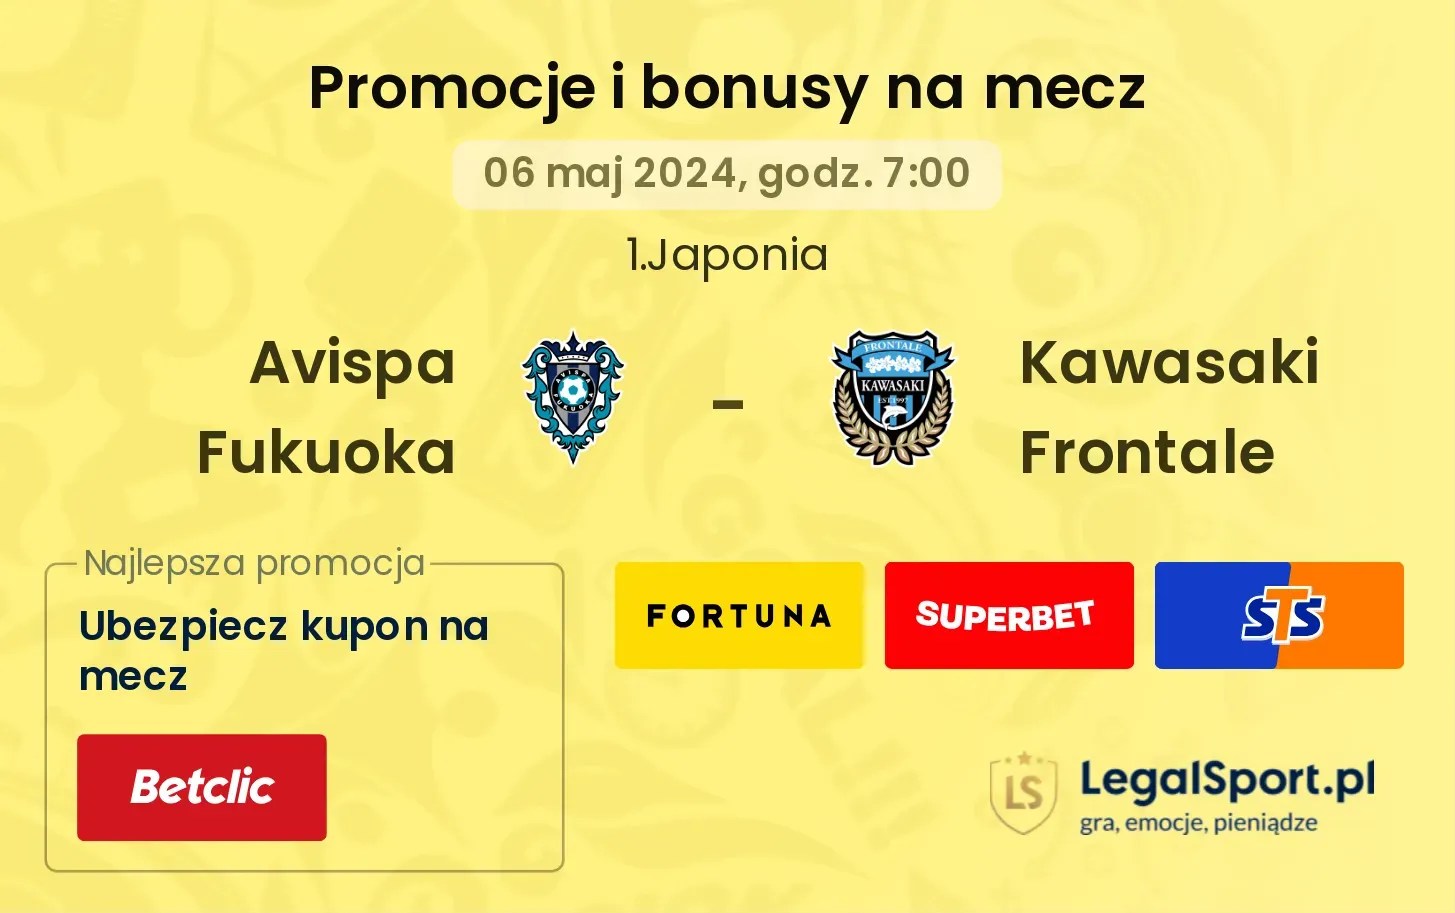 Avispa Fukuoka - Kawasaki Frontale promocje bonusy na mecz